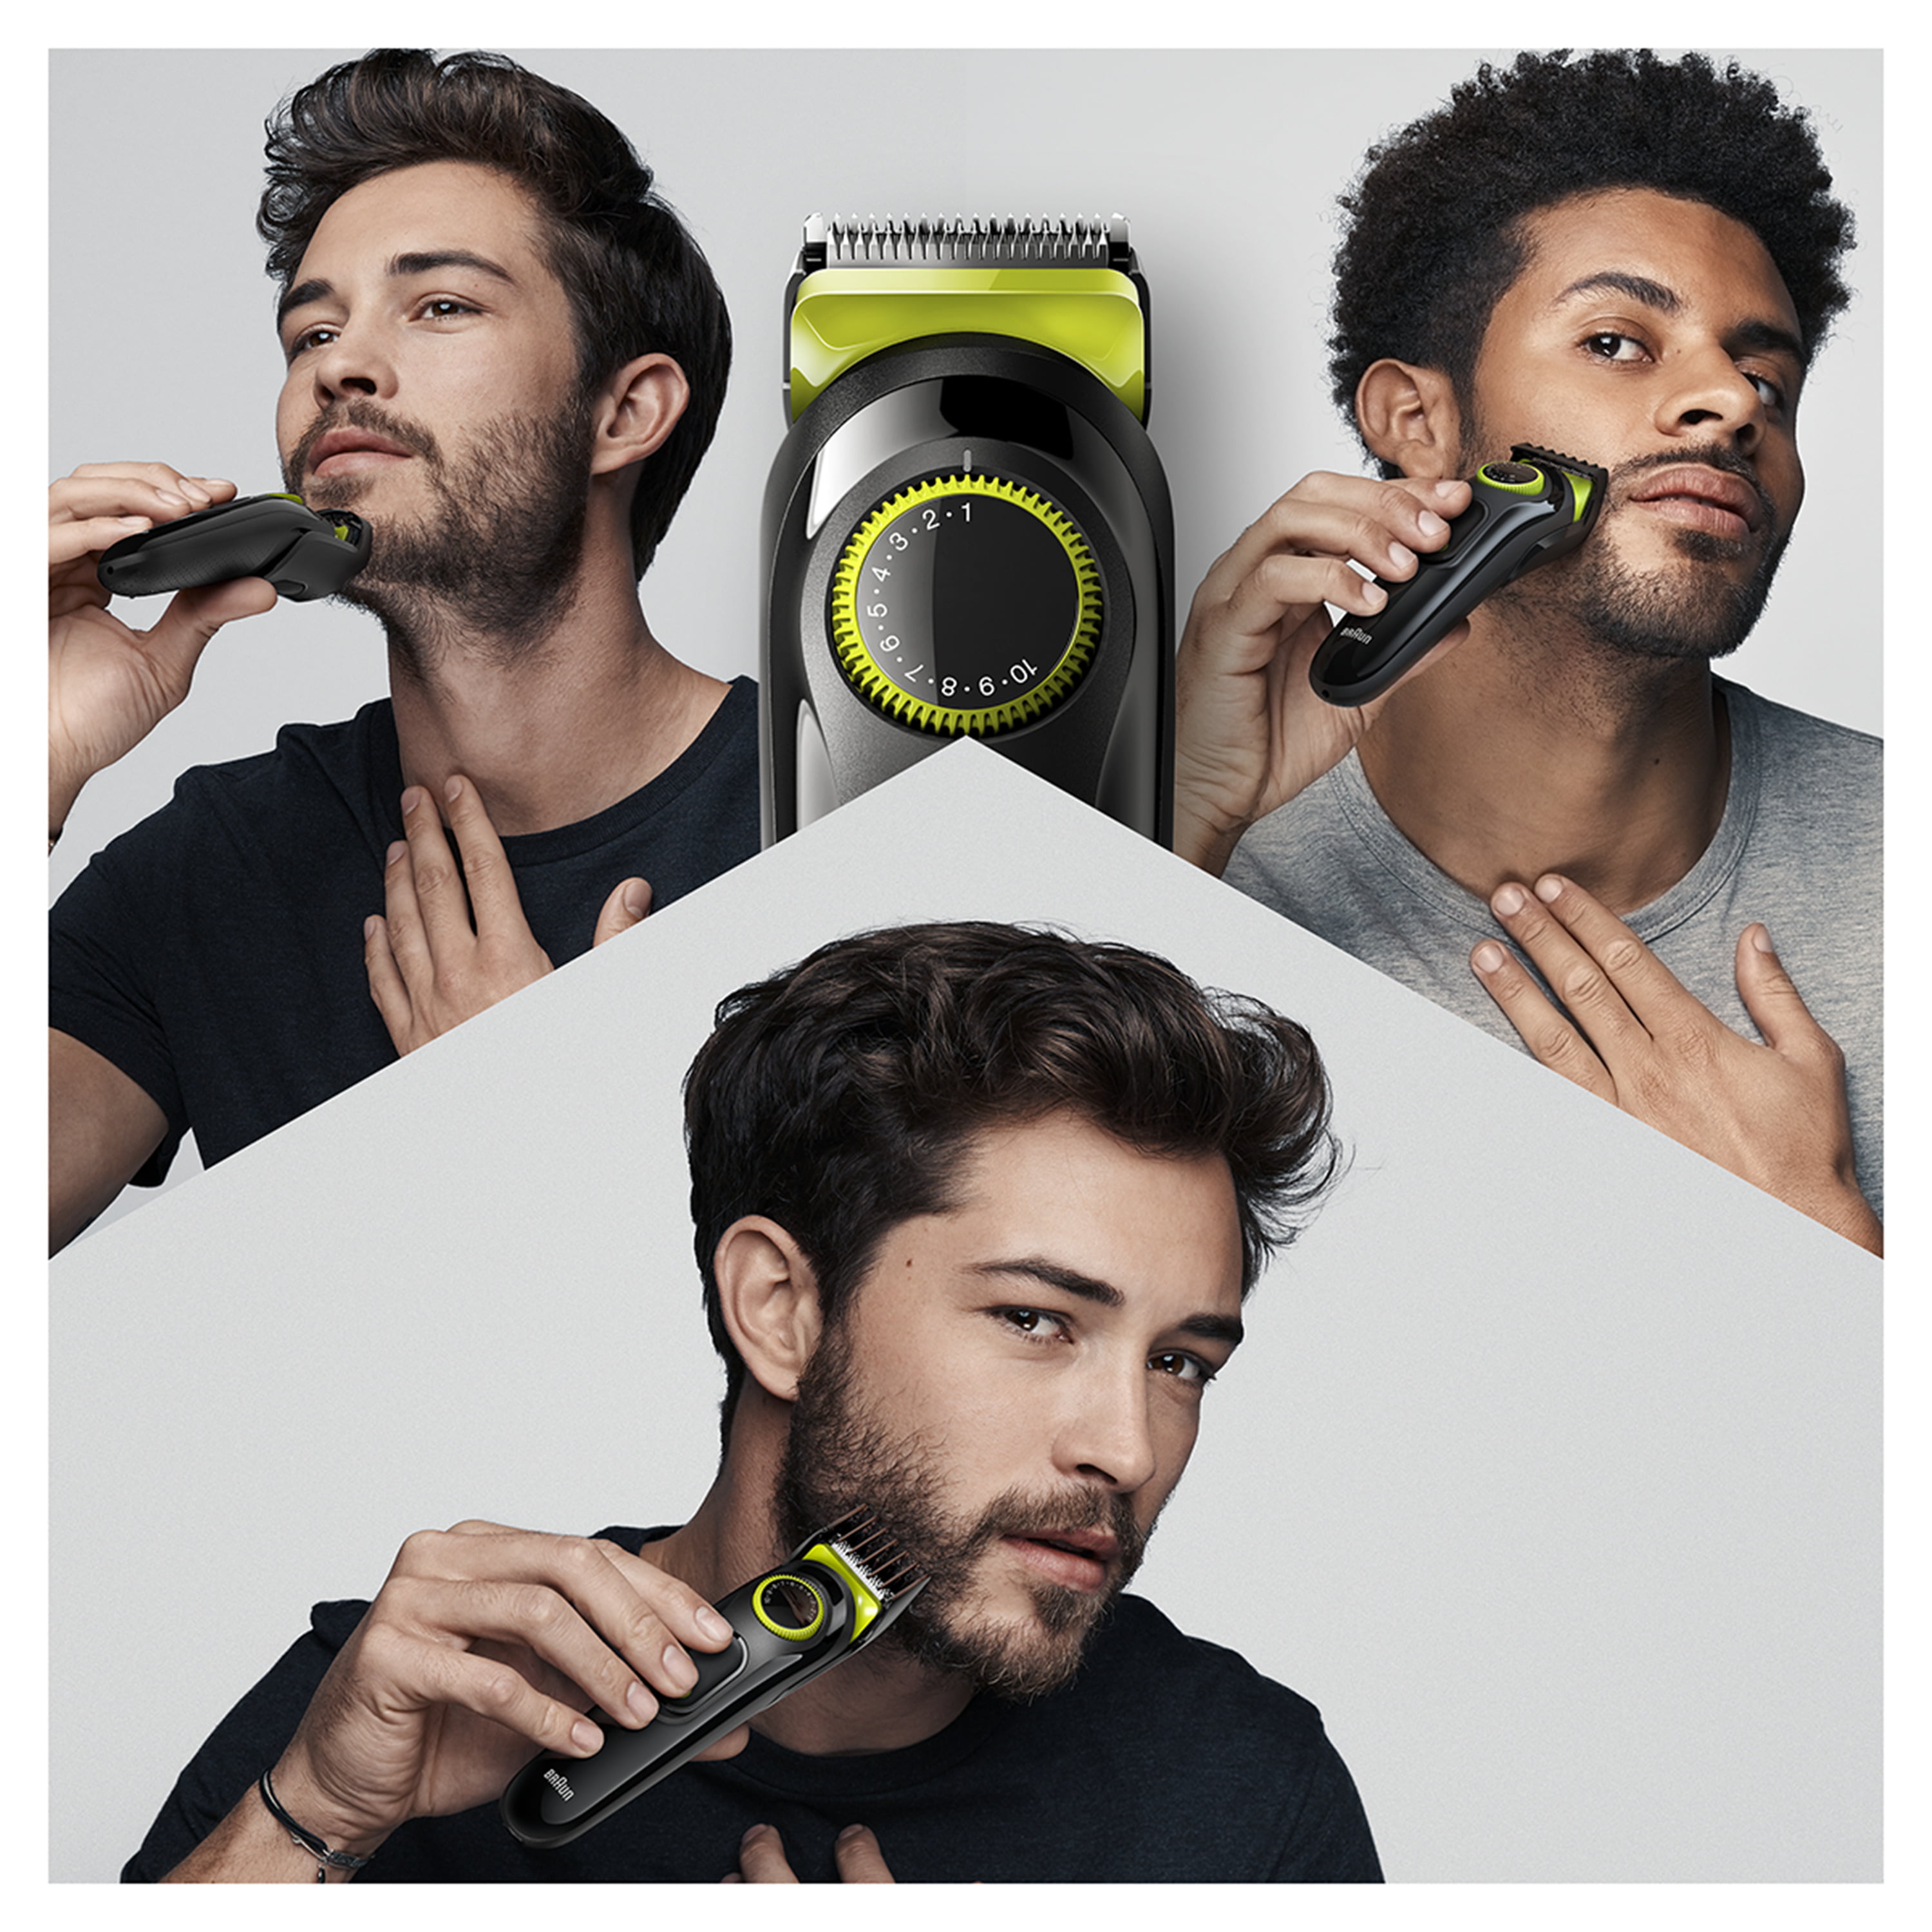 braun adjustable beard trimmer